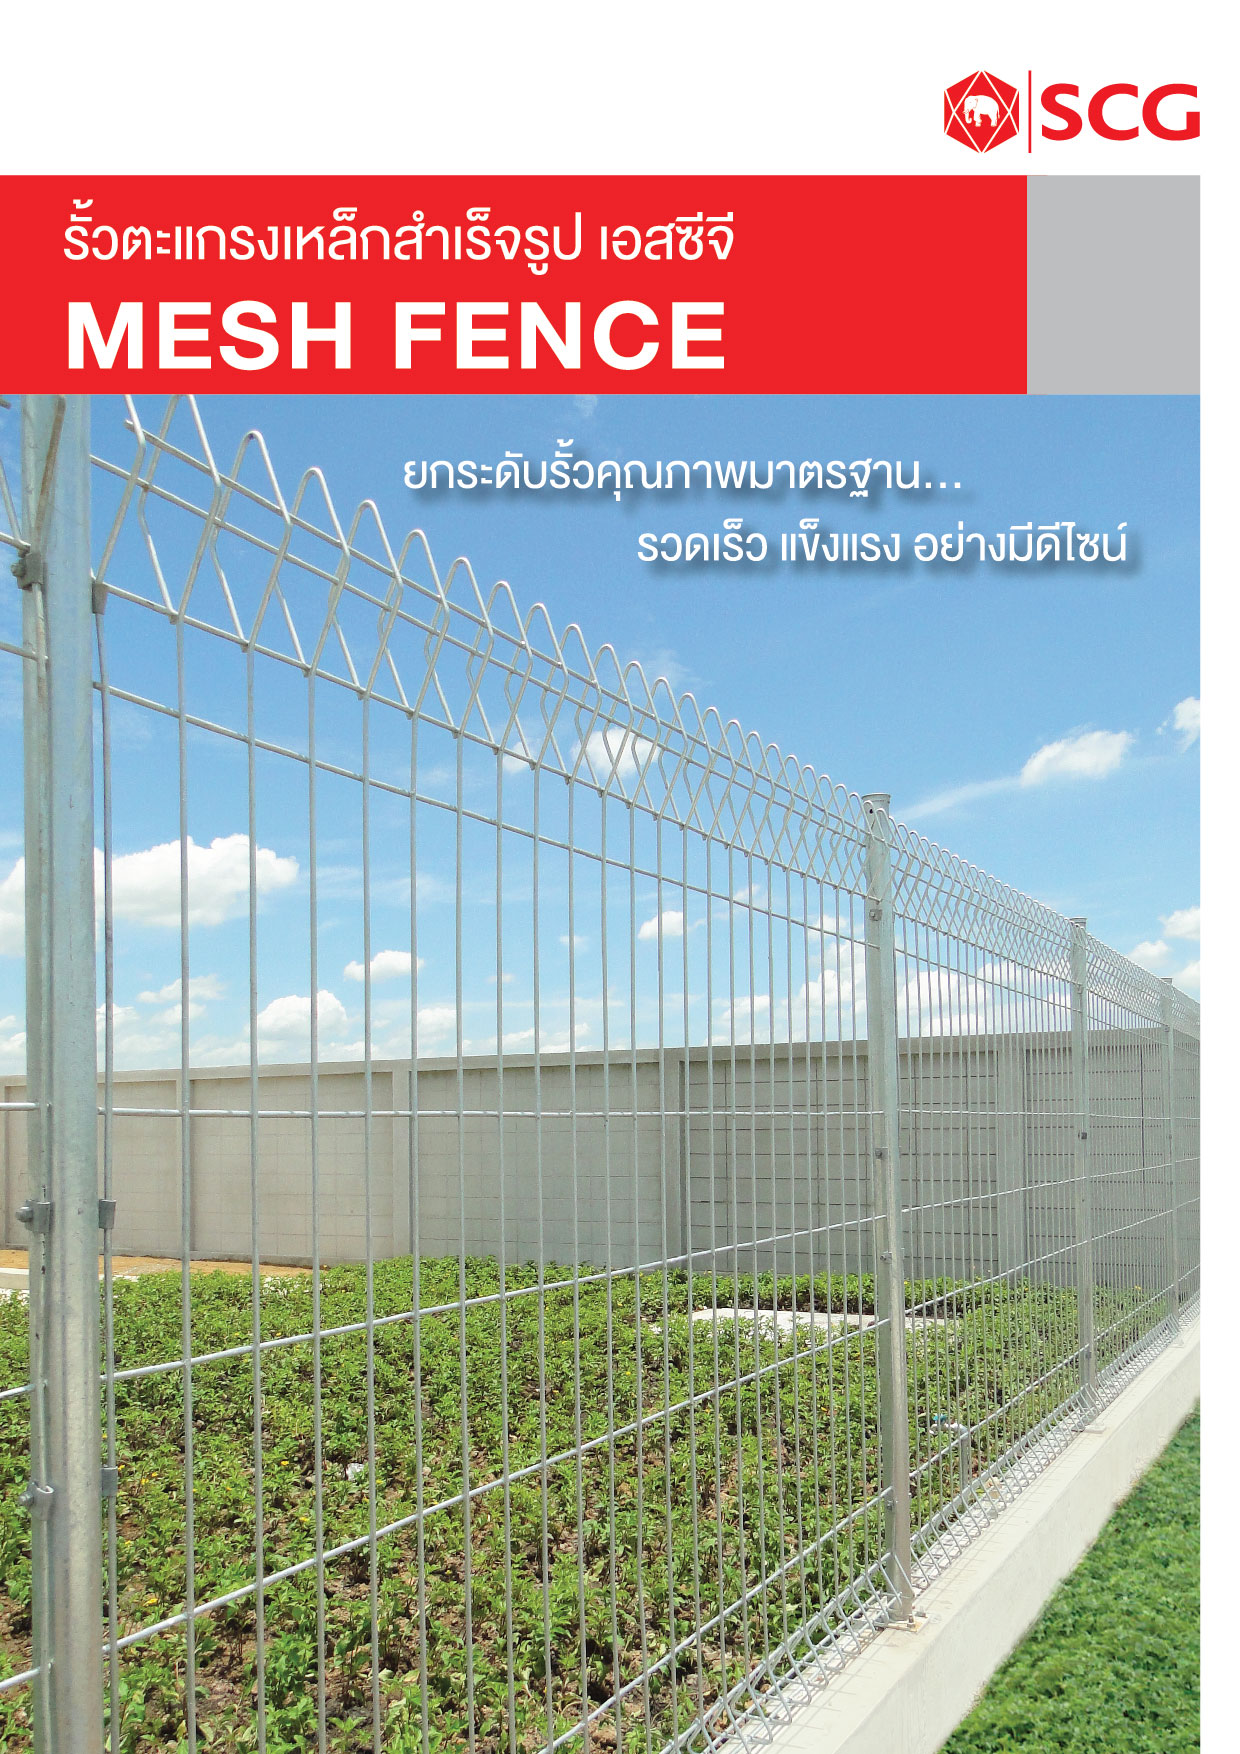 mesh fence รั้วตะแกรงเหล็ก เอสซีจี